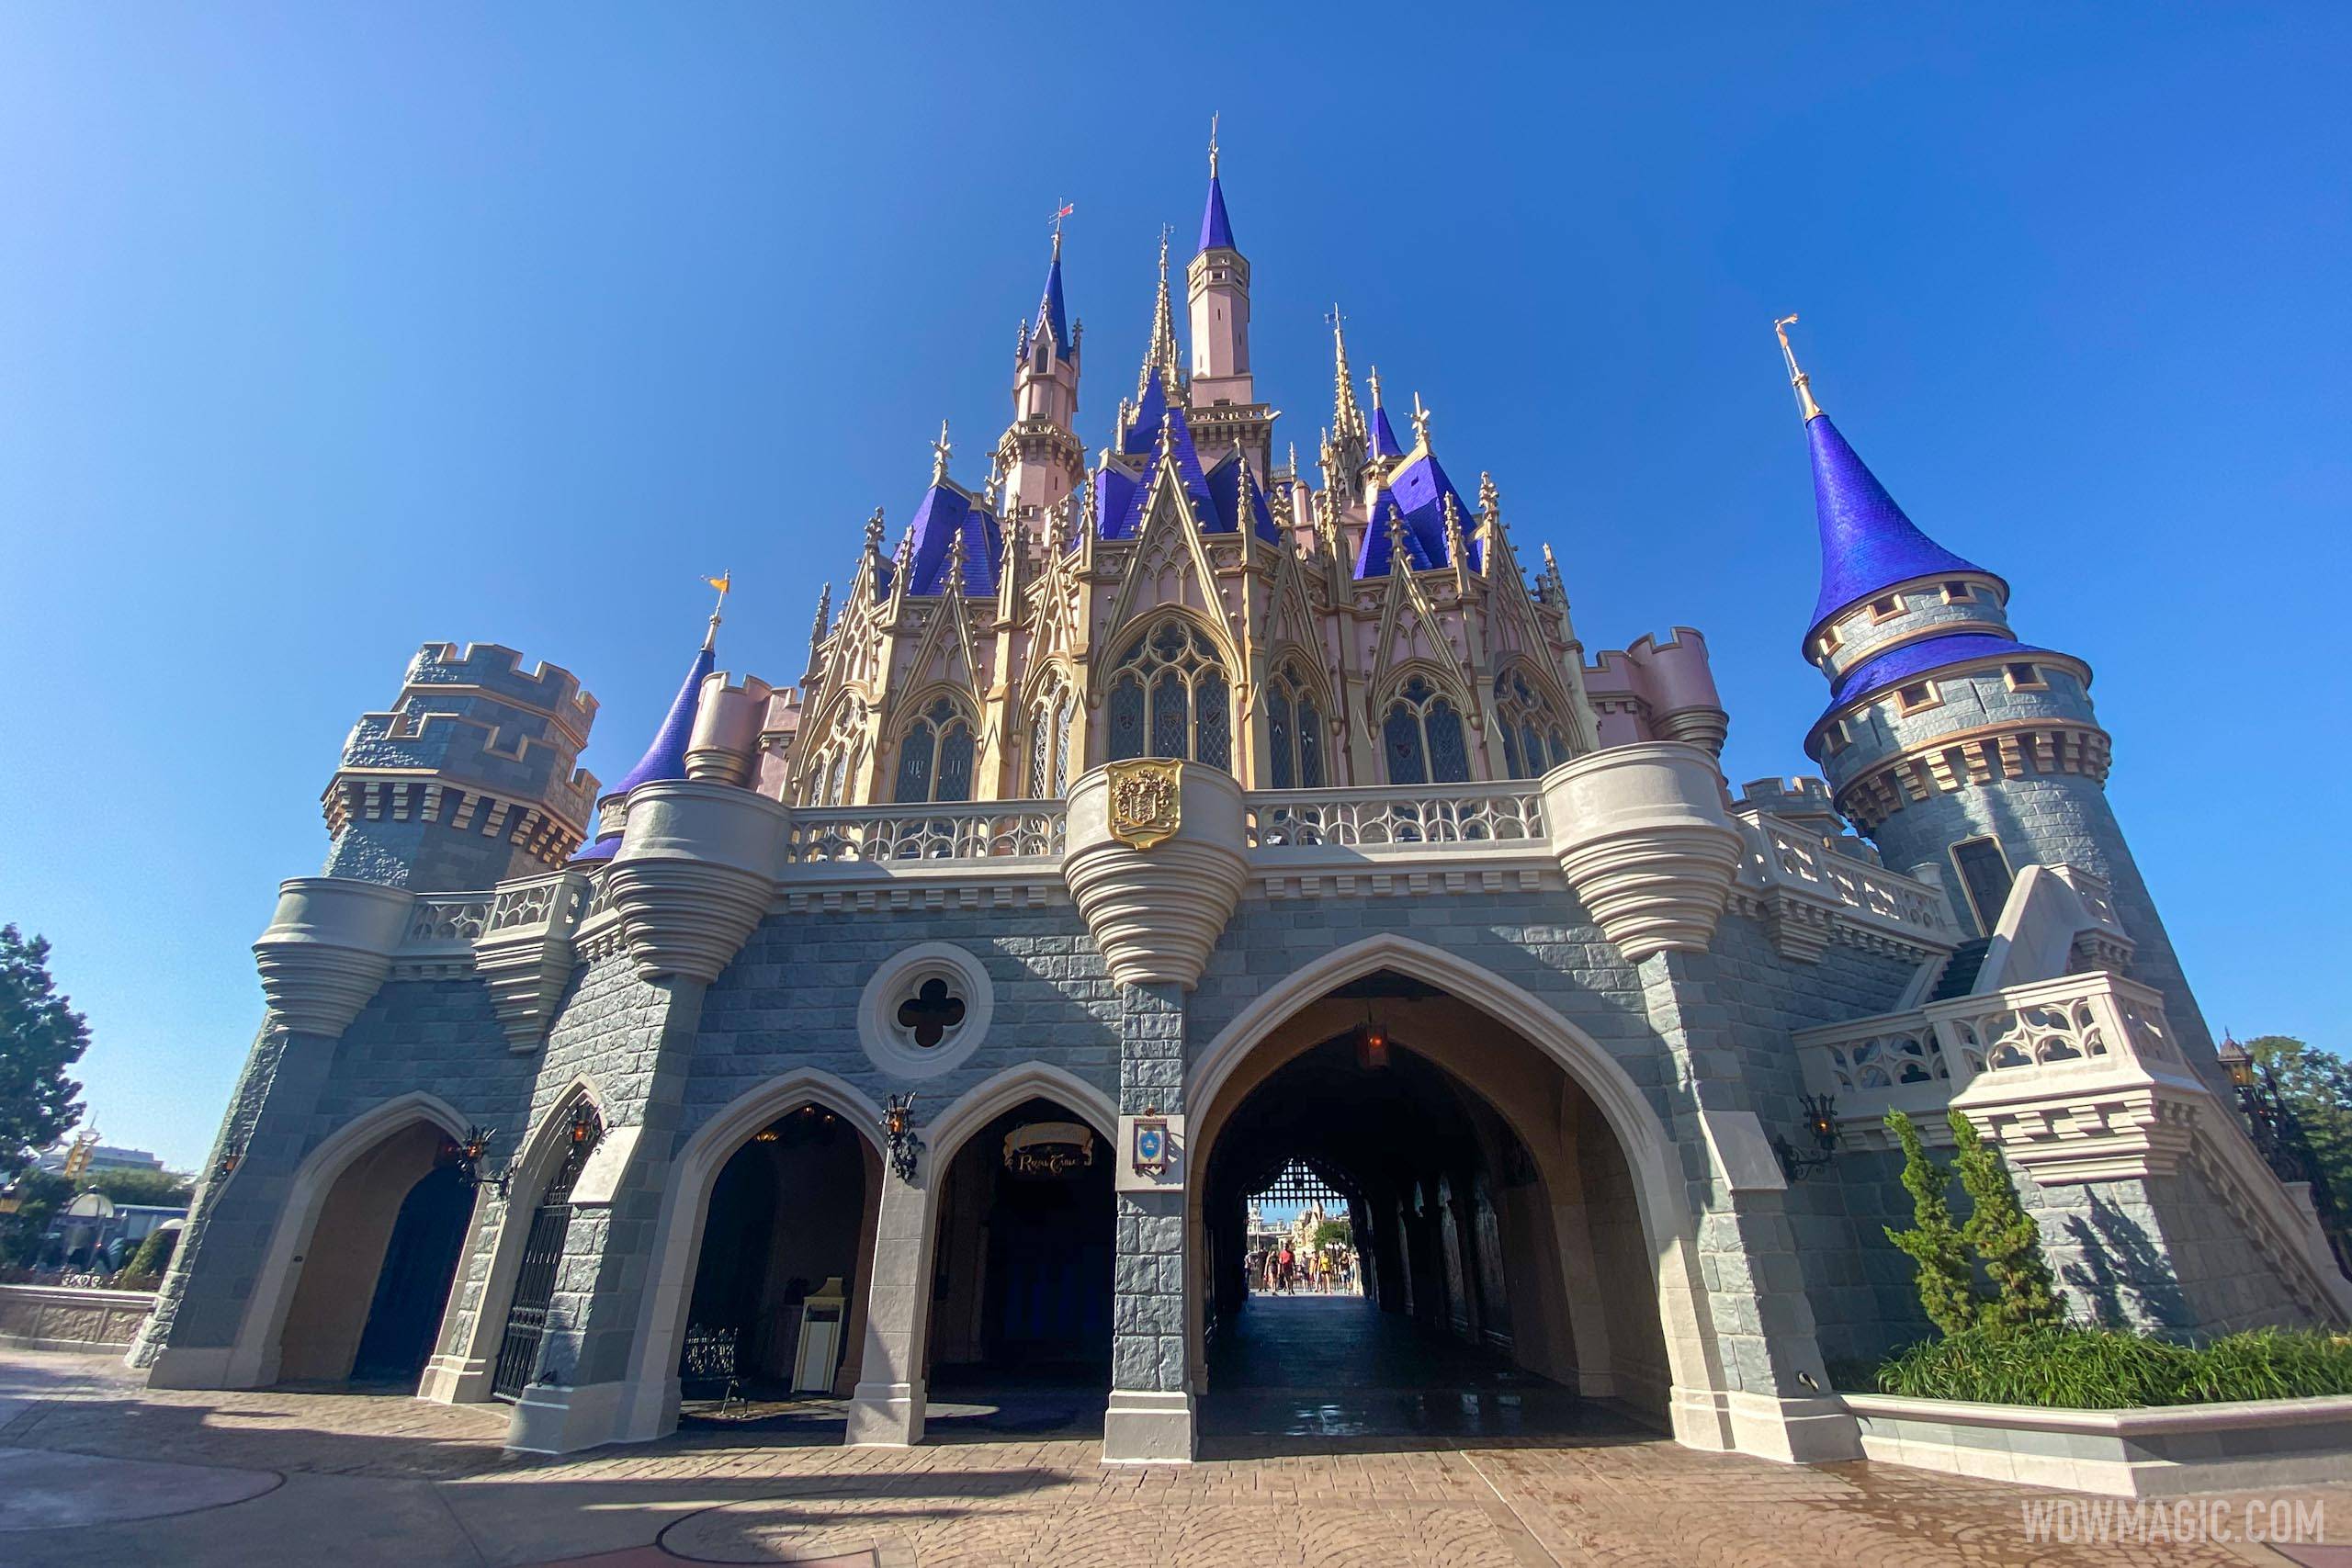 Cinderella Castle repainting - July 7 2020